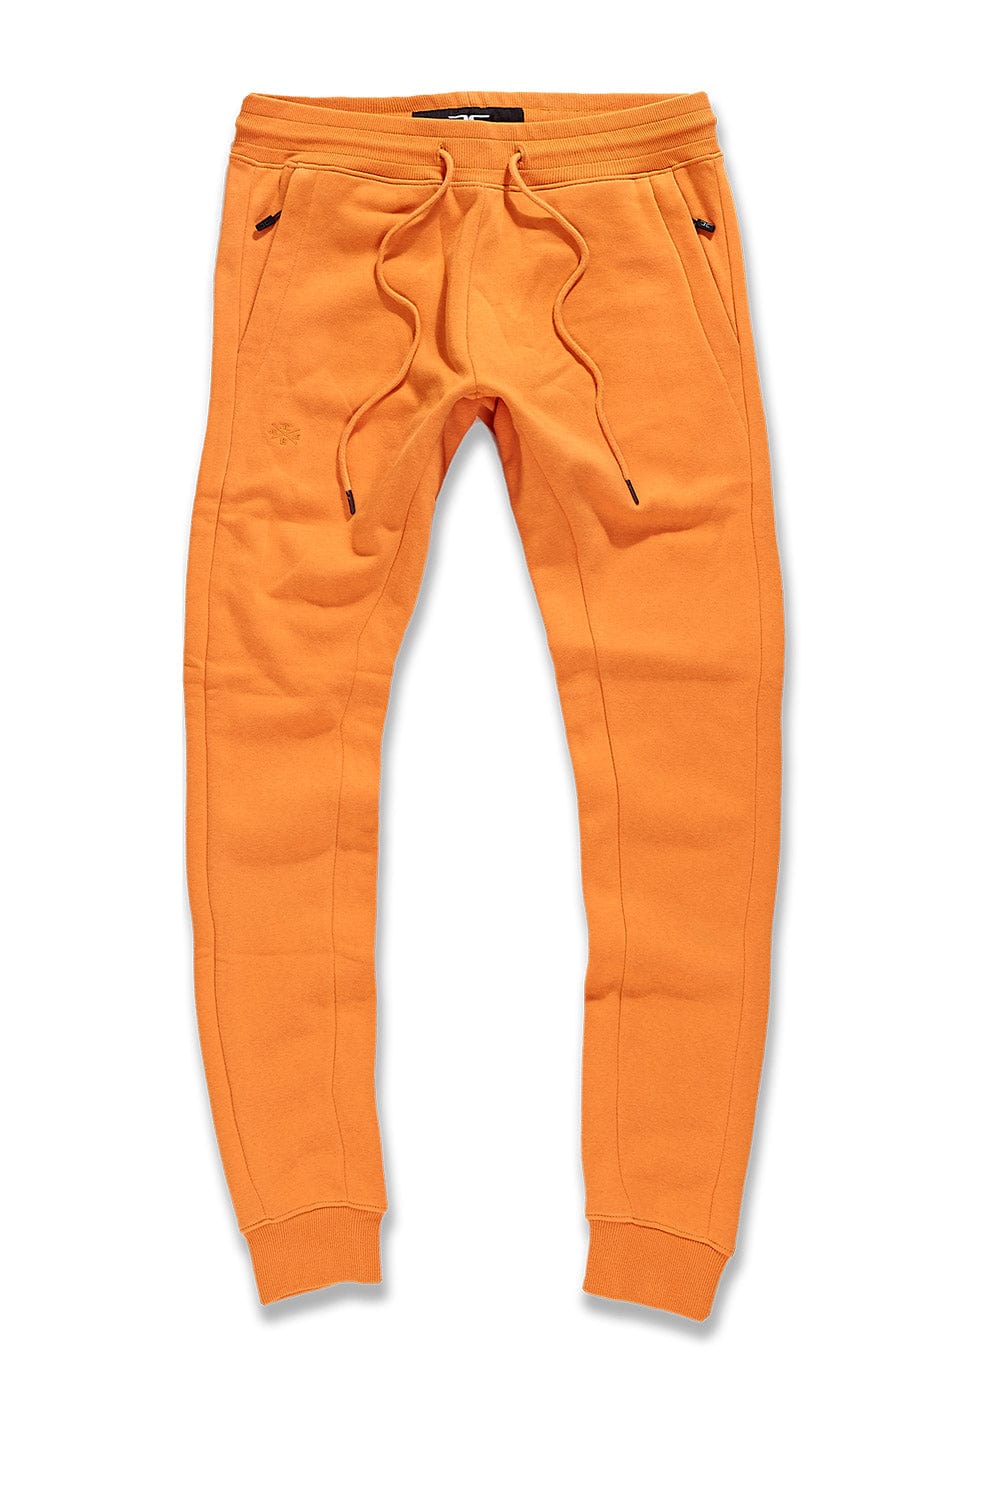 Jordan Craig Uptown Jogger Sweatpants (Secret Sale) Orange / S